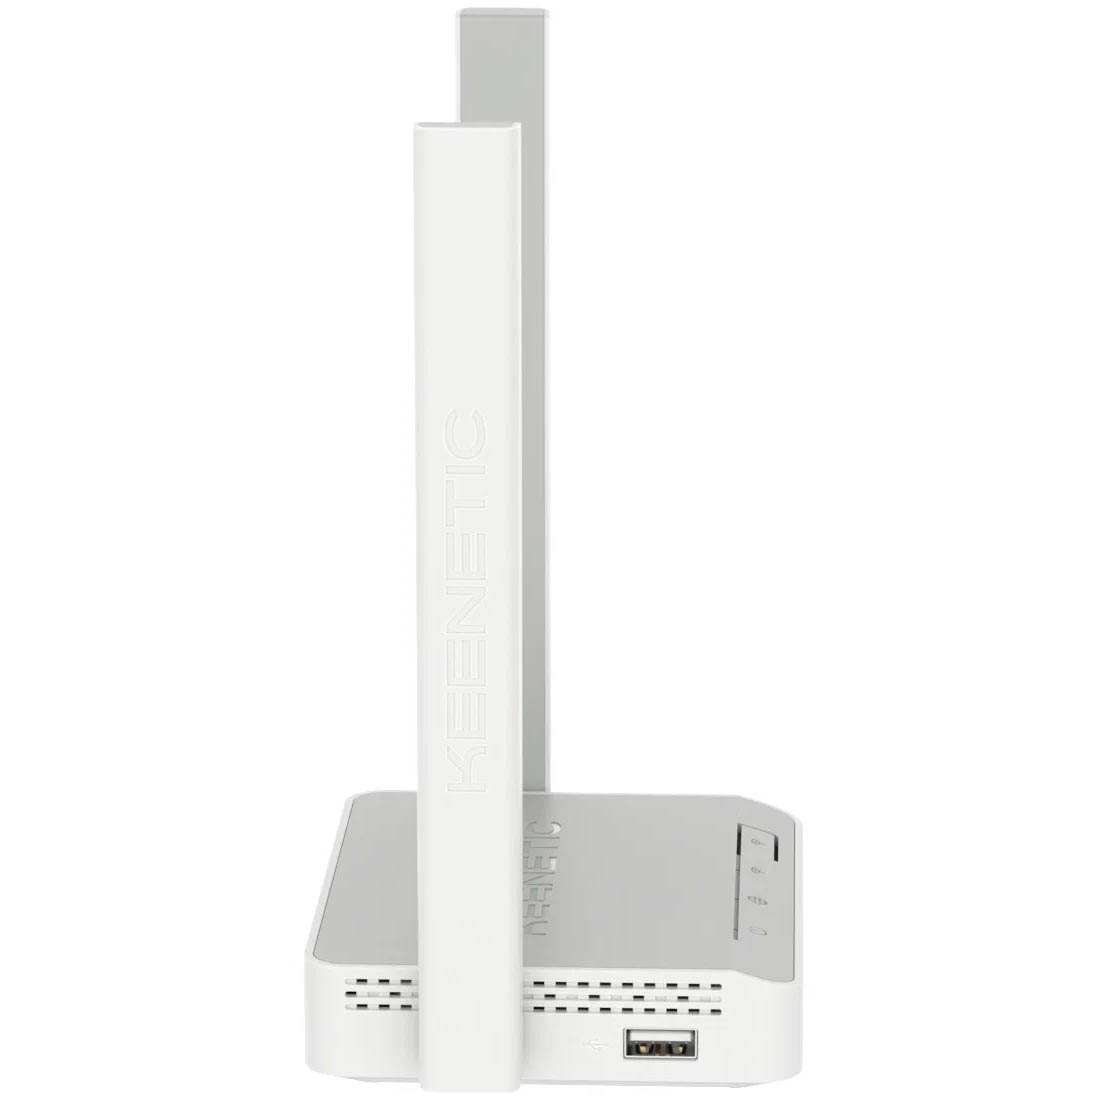 4G модем, Wi-Fi роутер, маршрутизатор KEENETIC KN-1212, цвет белый